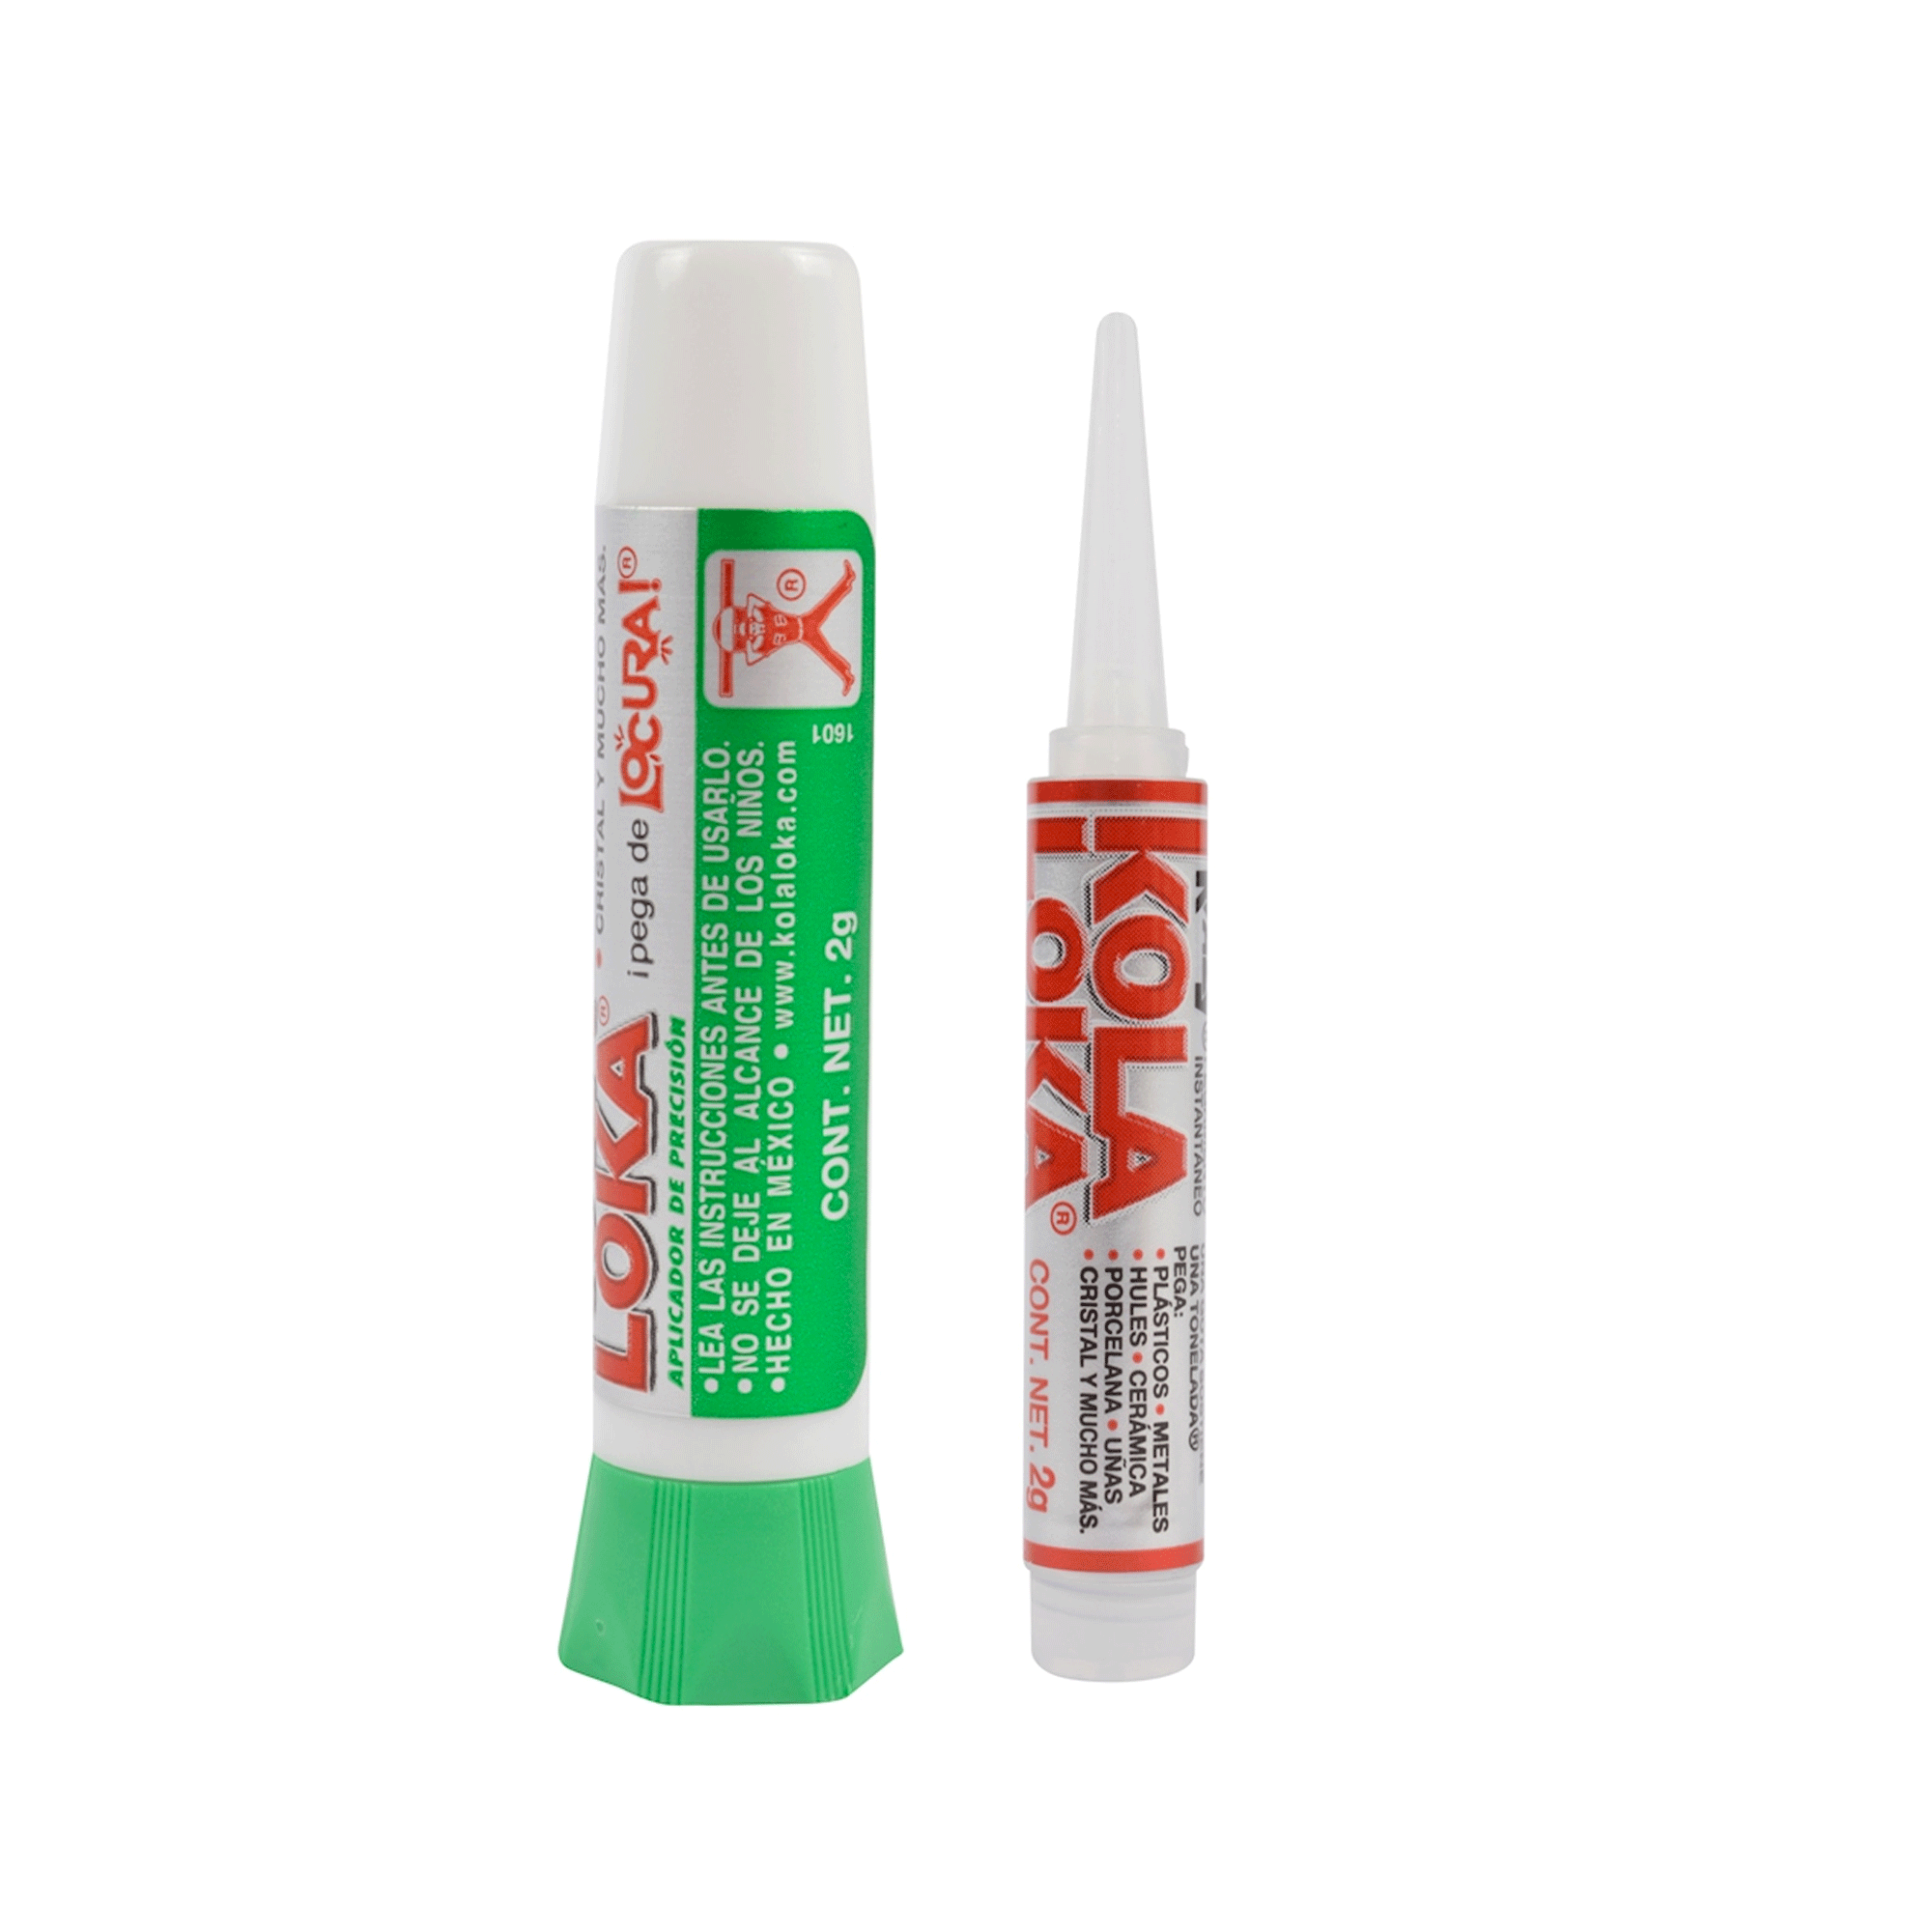 Kola Loka instant glue (2 g)